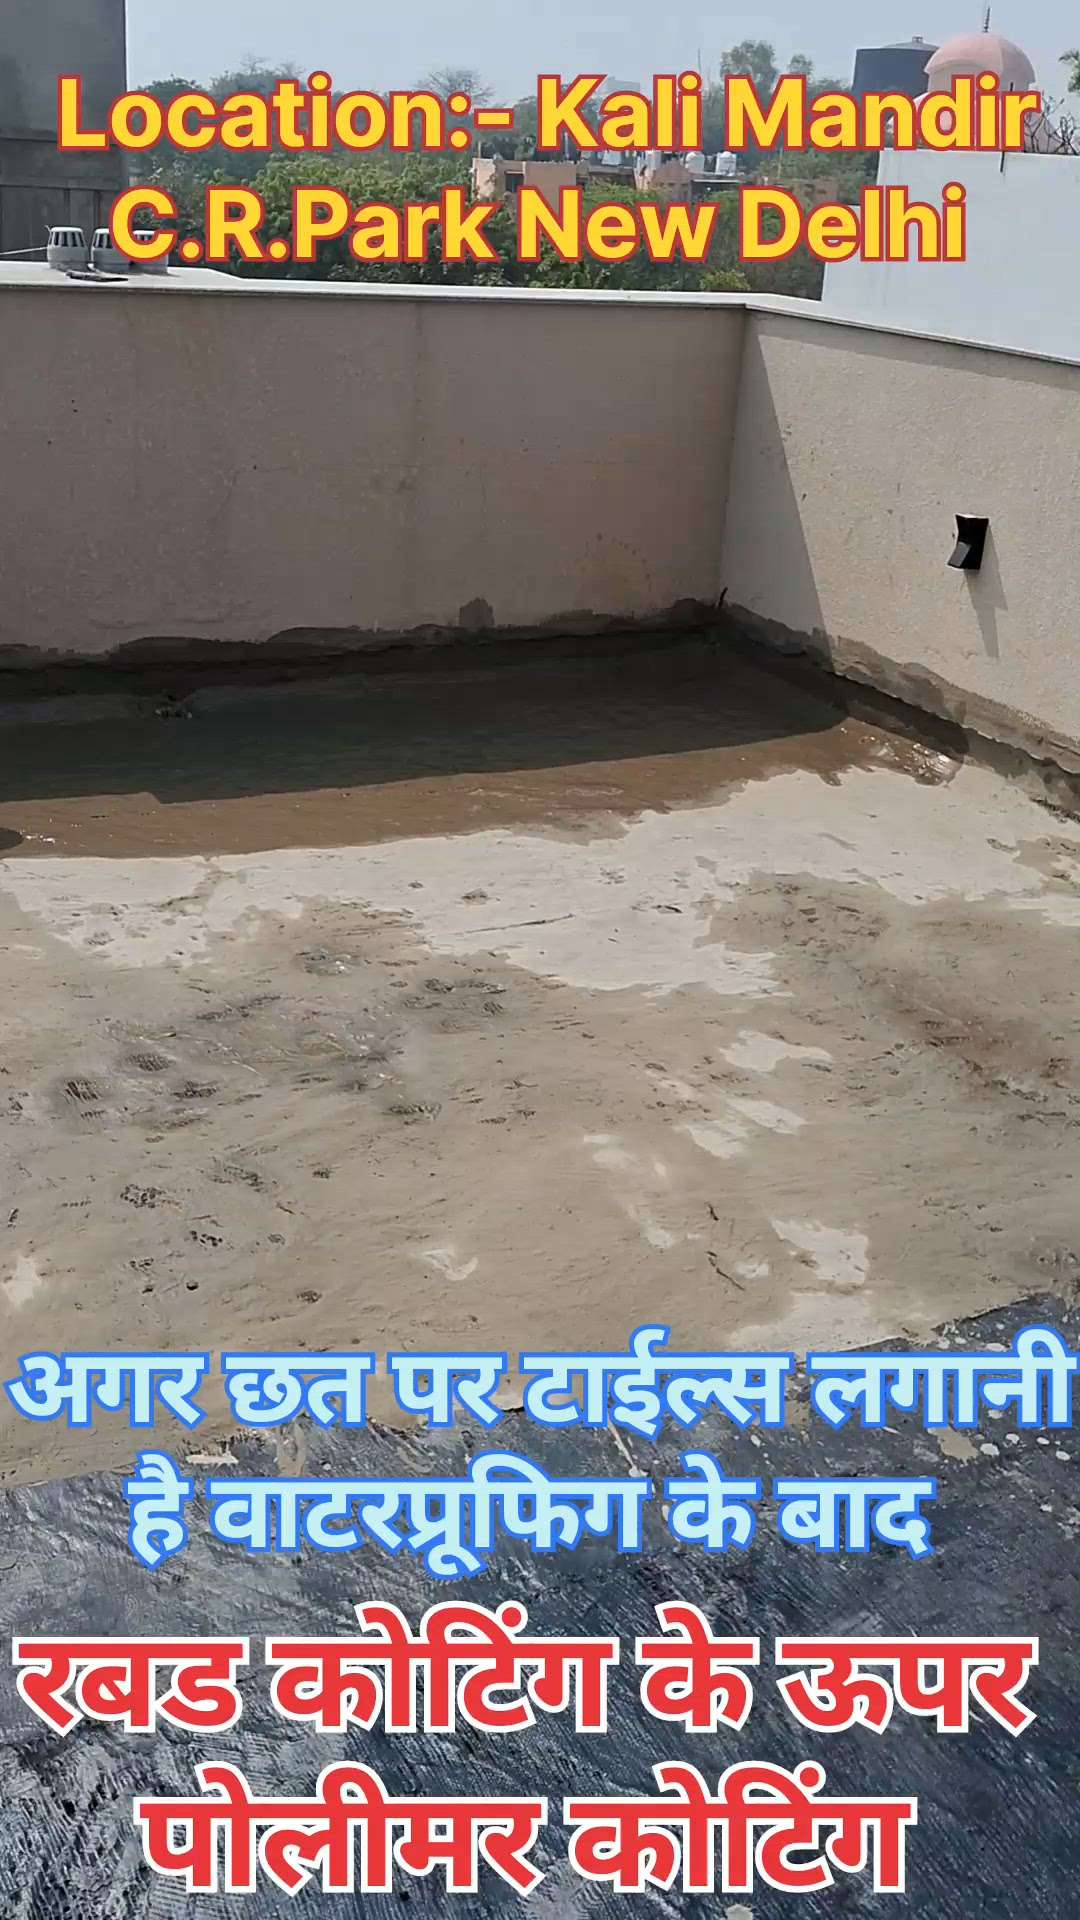 #waterproofing #construction #likej #leakage #सीलन #छत #Solution #samasya samasya #deewar #Bathroom #kitchen #basementwaterproofing